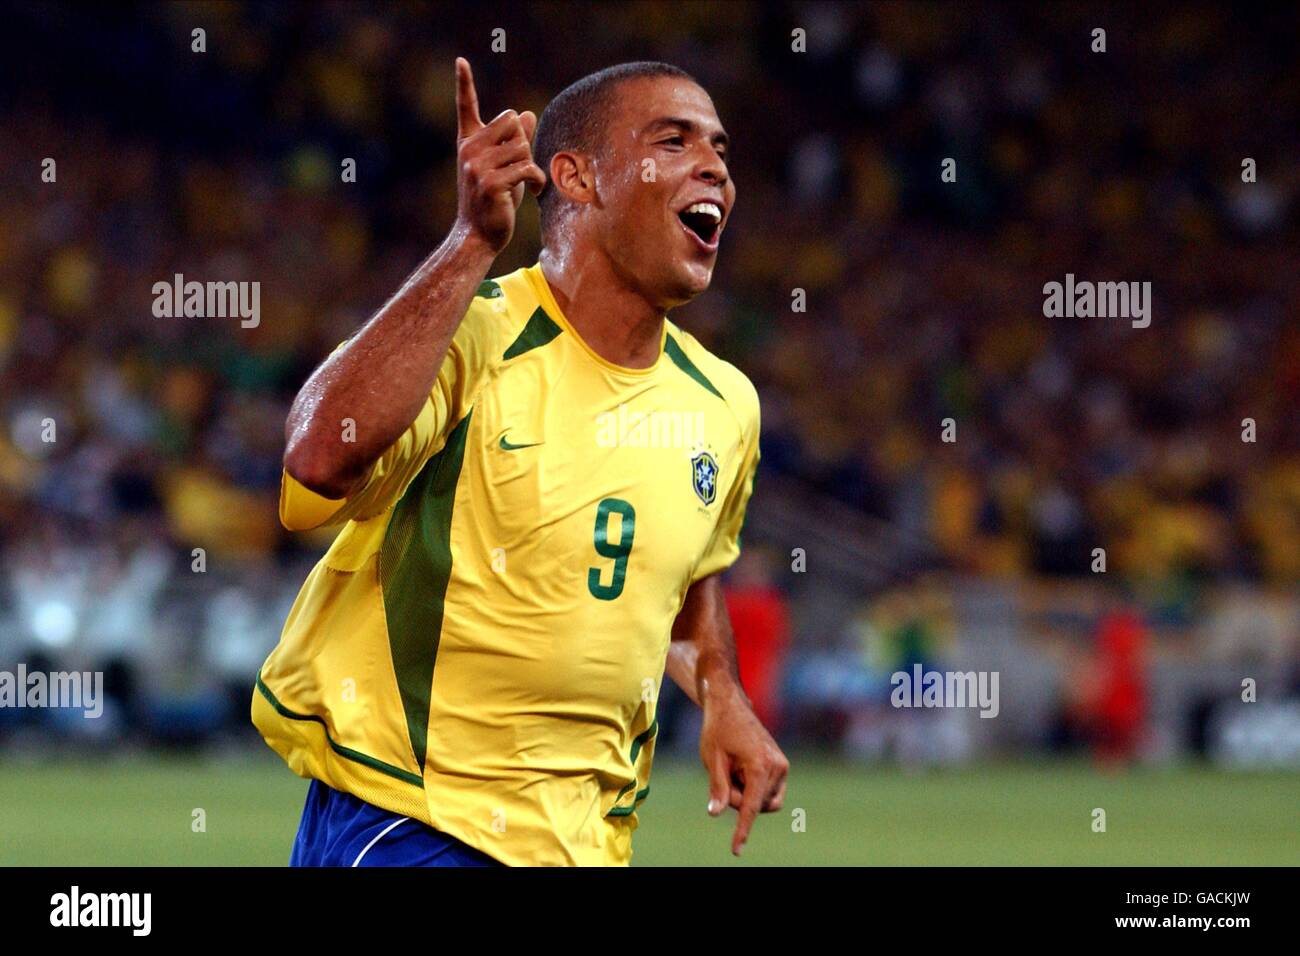 Soccer - FIFA World Cup 2002 - Second Round - Brazil v Belgium. Brazil's Ronaldo celebrates scoring their second goal Stock Photo